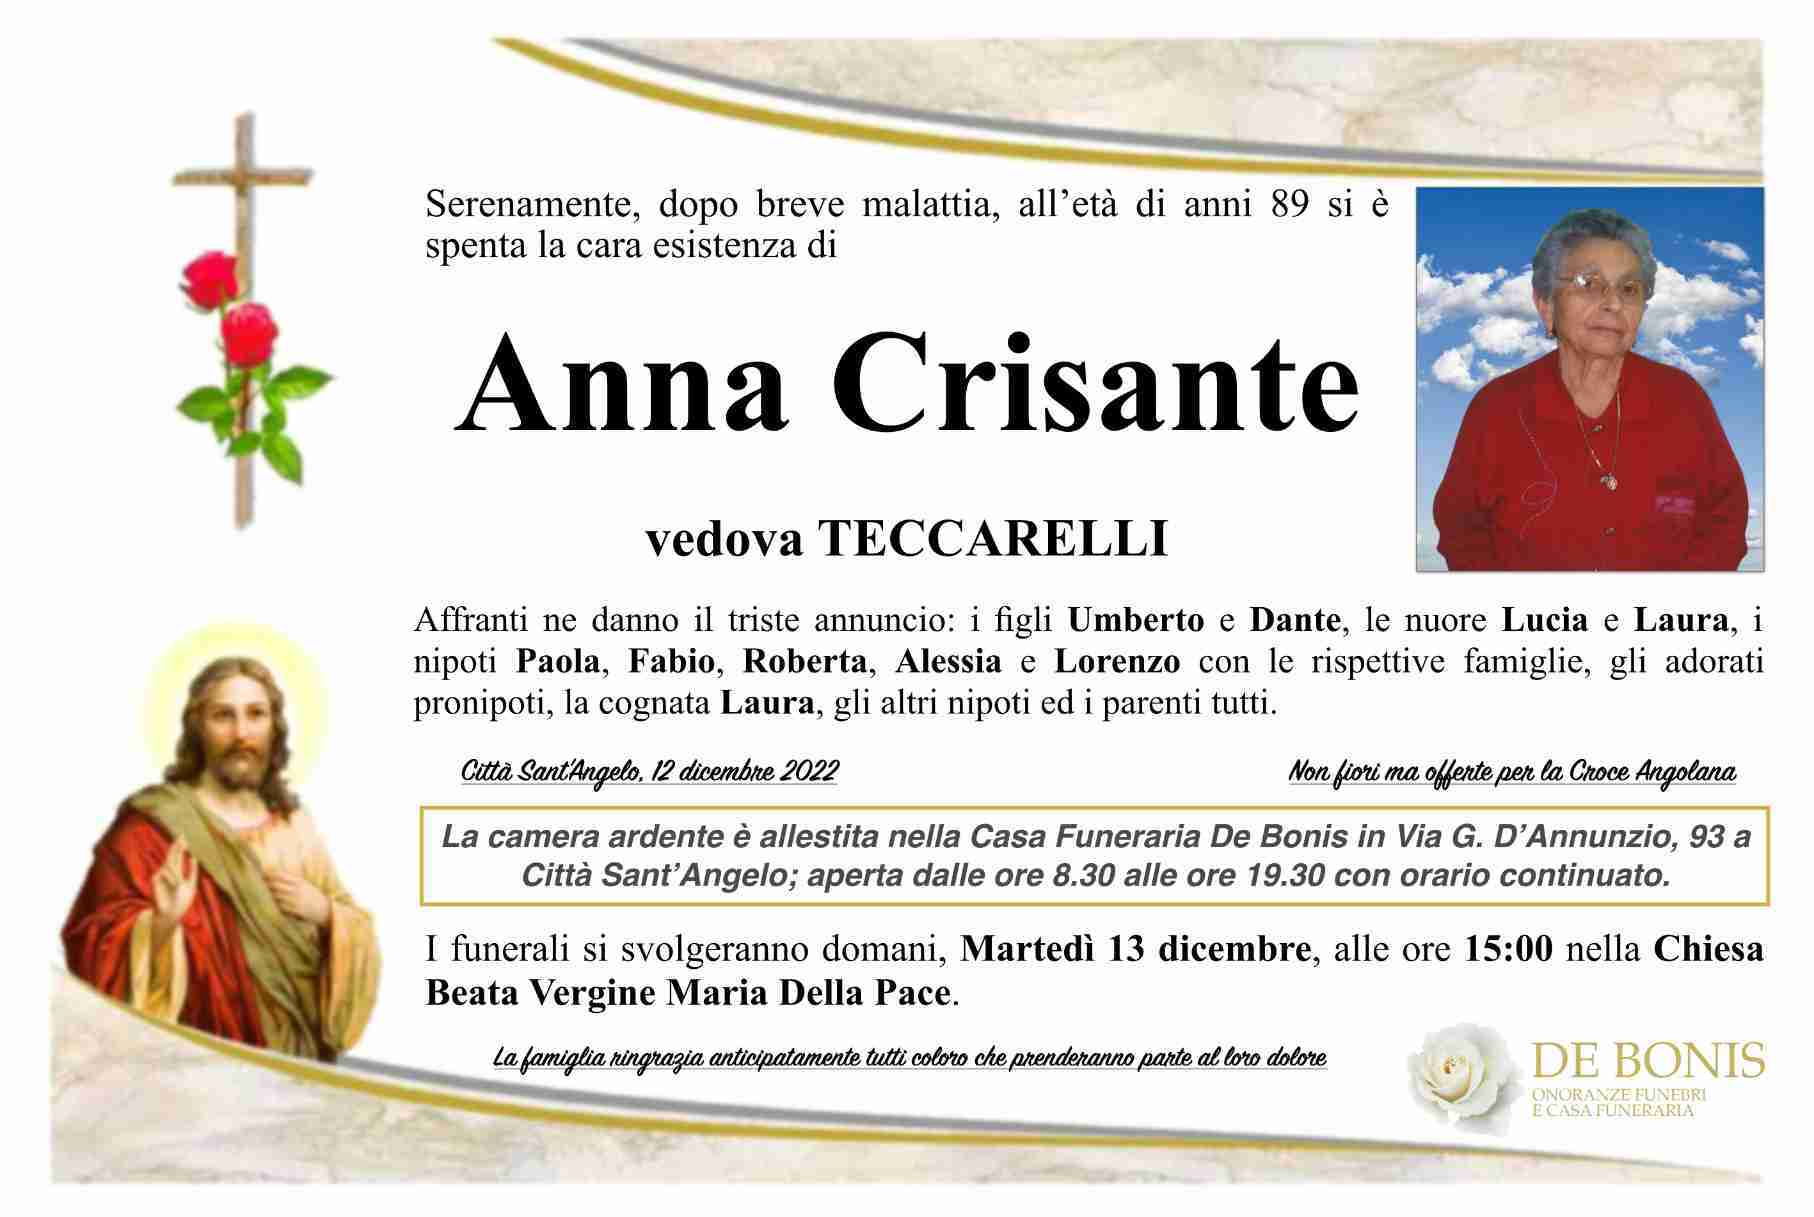 Anna Crisante